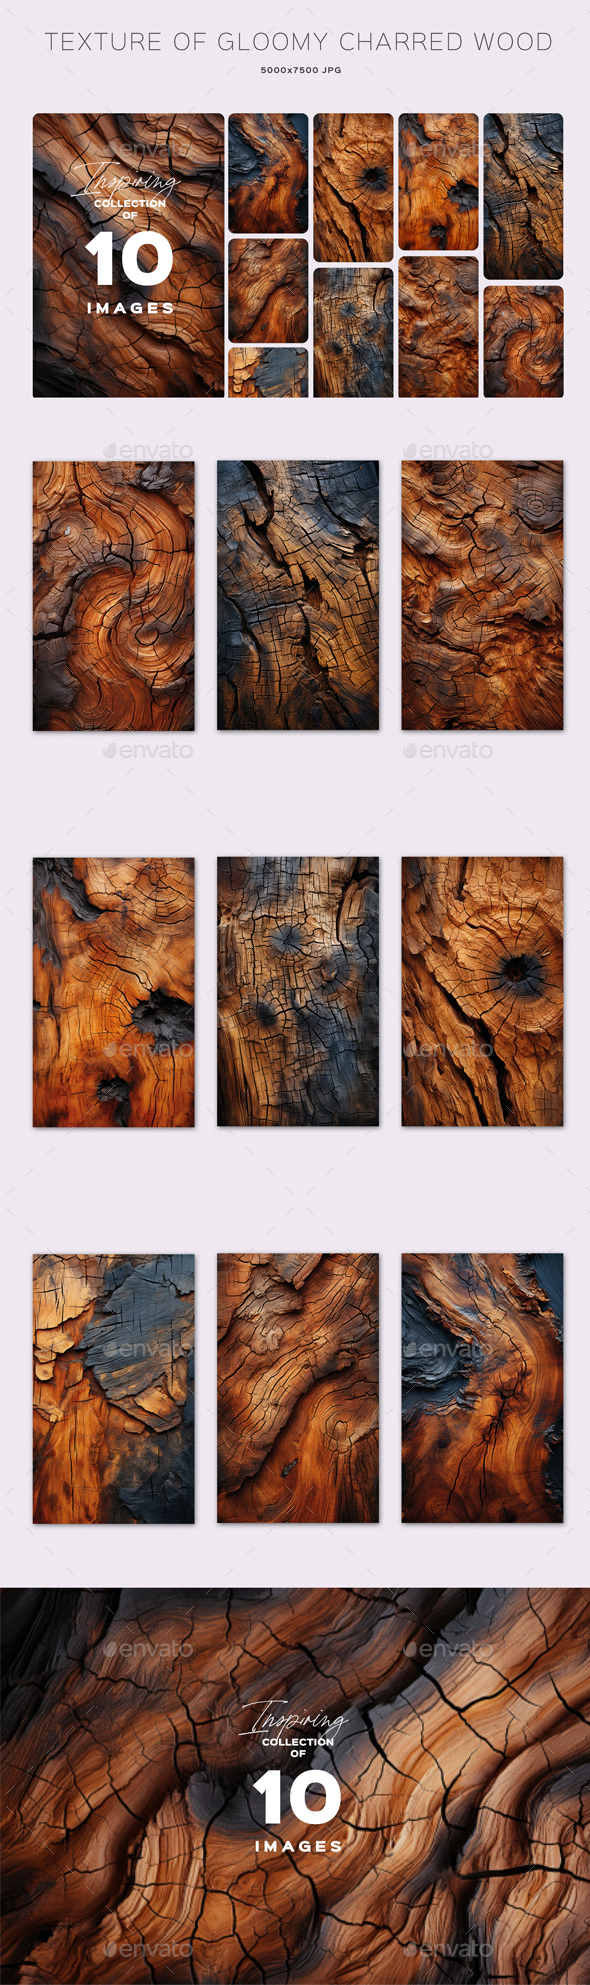 [DOWNLOAD]Texture Of Gloomy Charred Wood